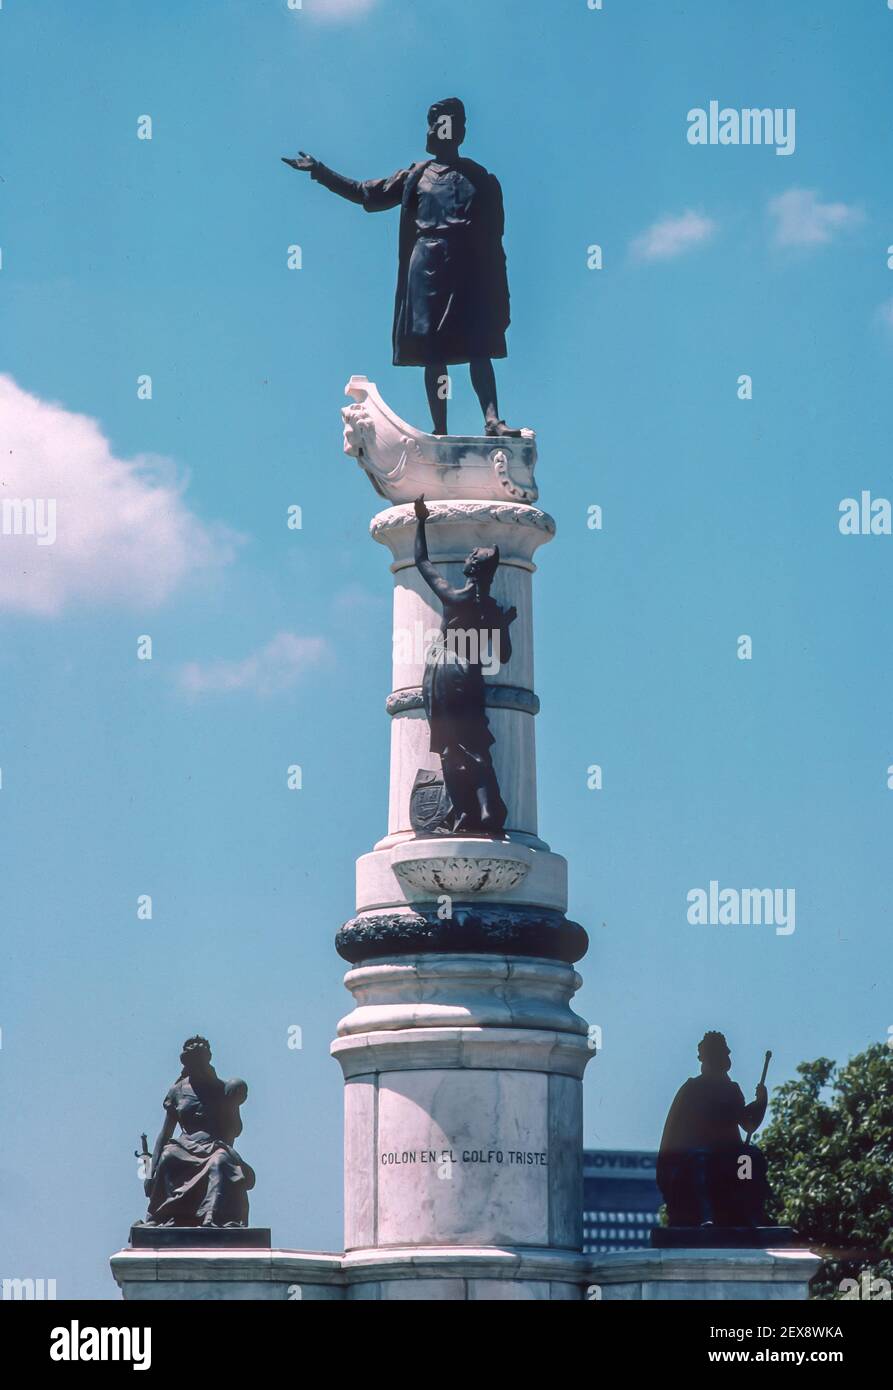 CARACAS, VENEZUELA, 1988 - Christopher Columbus statue in Caracas. Colon en el Golfo Triste, Statue was toppled in 2004. Stock Photo